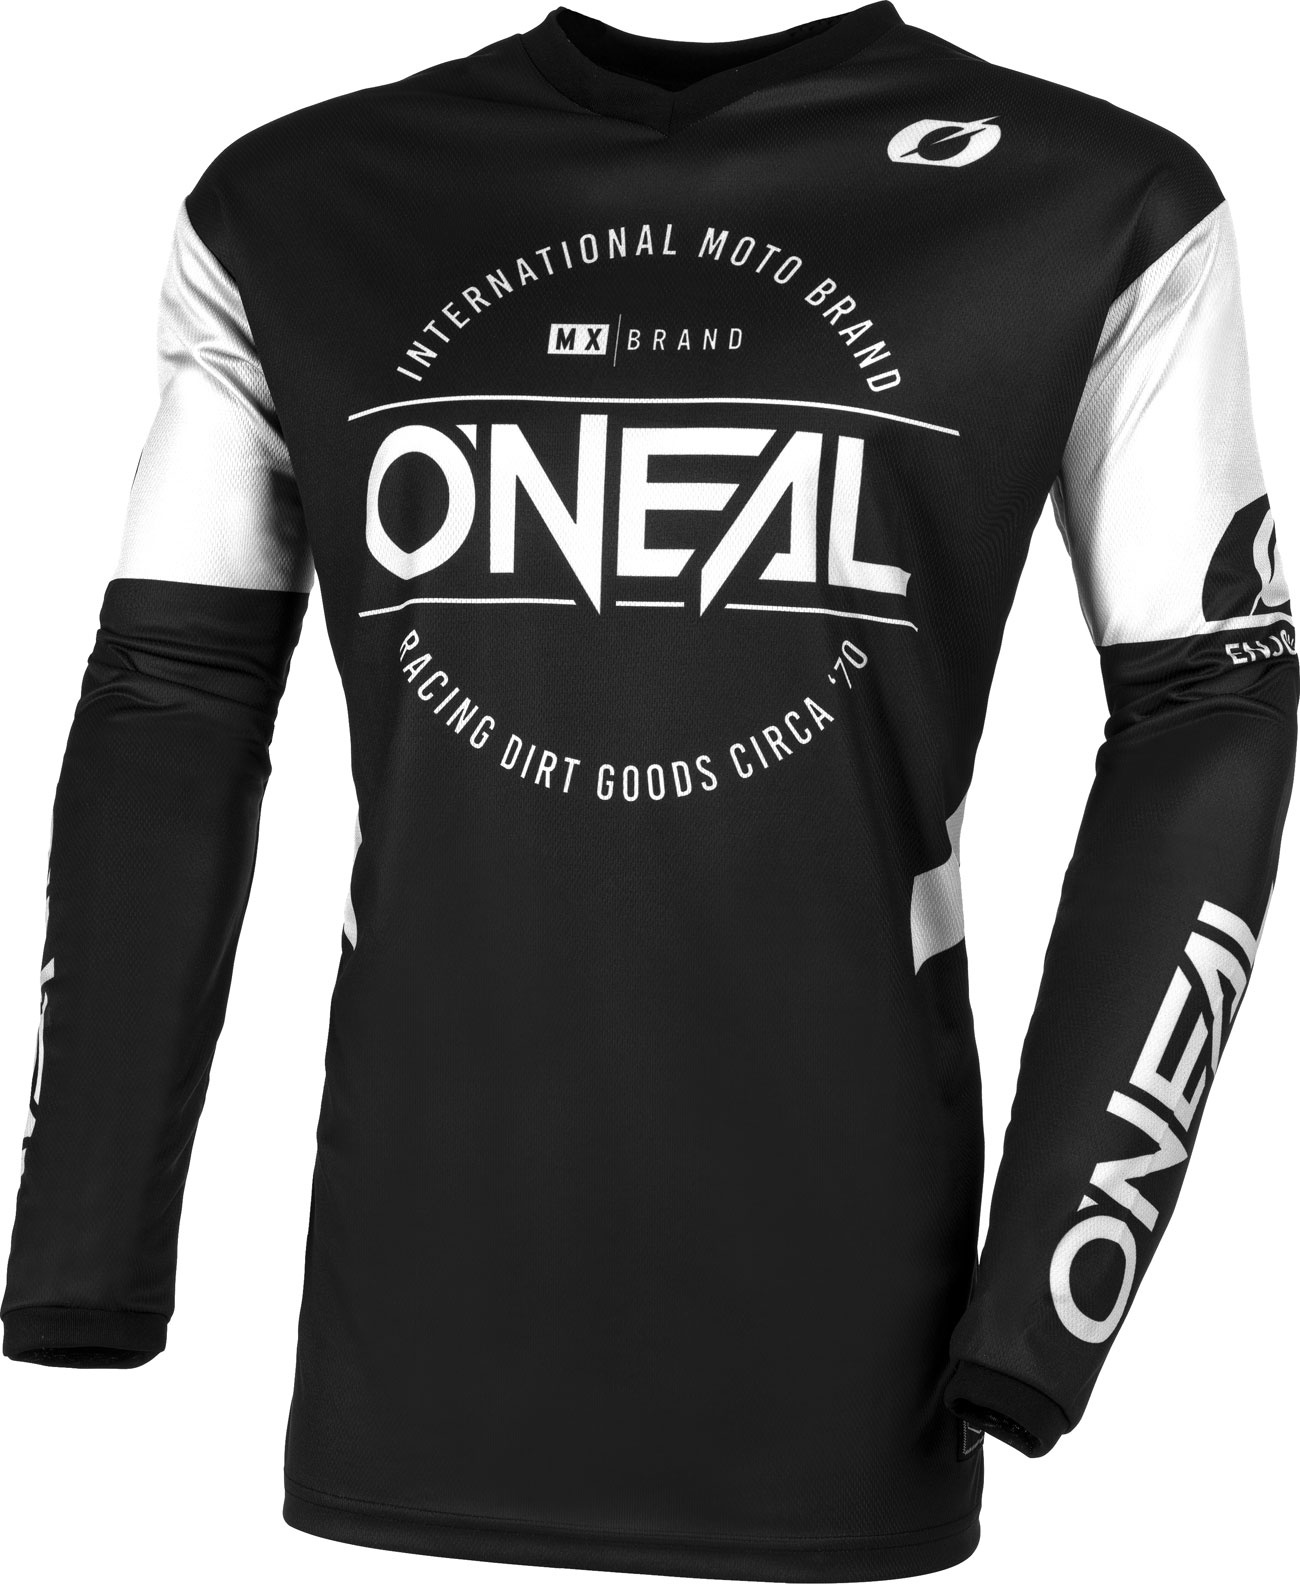 ONeal Element Brand S23, jersey - Noir/Blanc - M